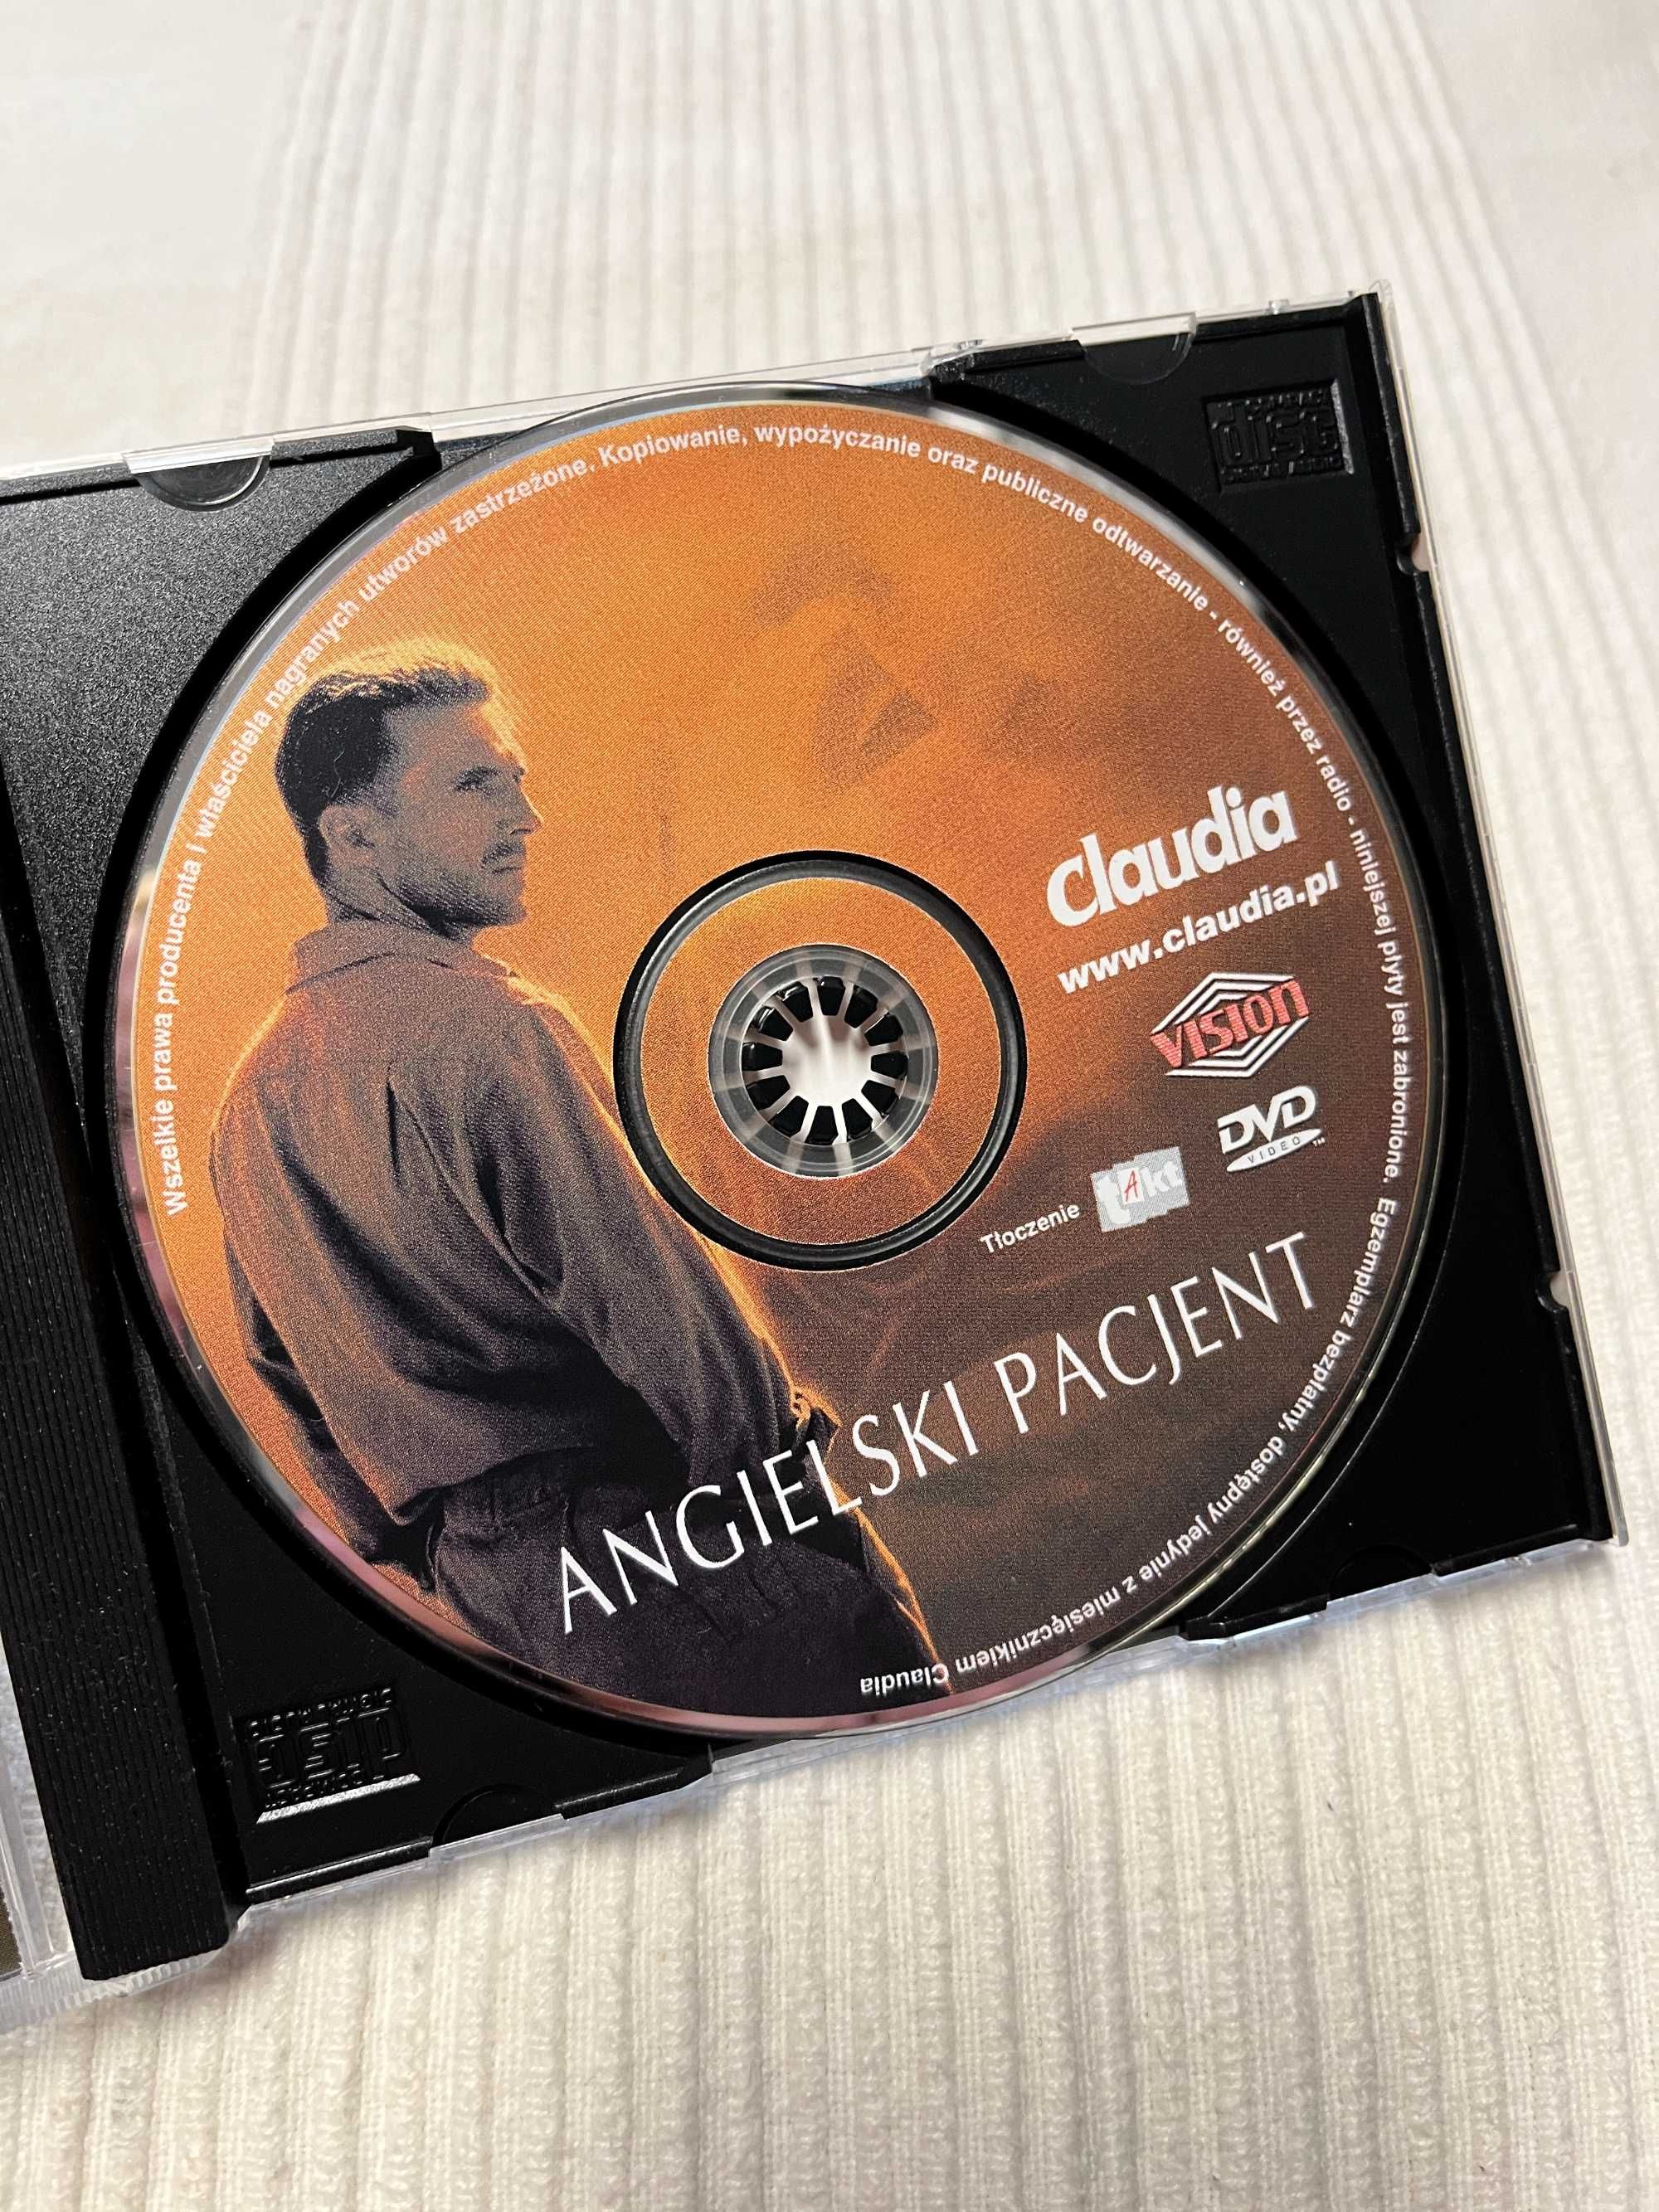 Angielski Pacjent The English Patient 1996 film DVD movie cinema kino